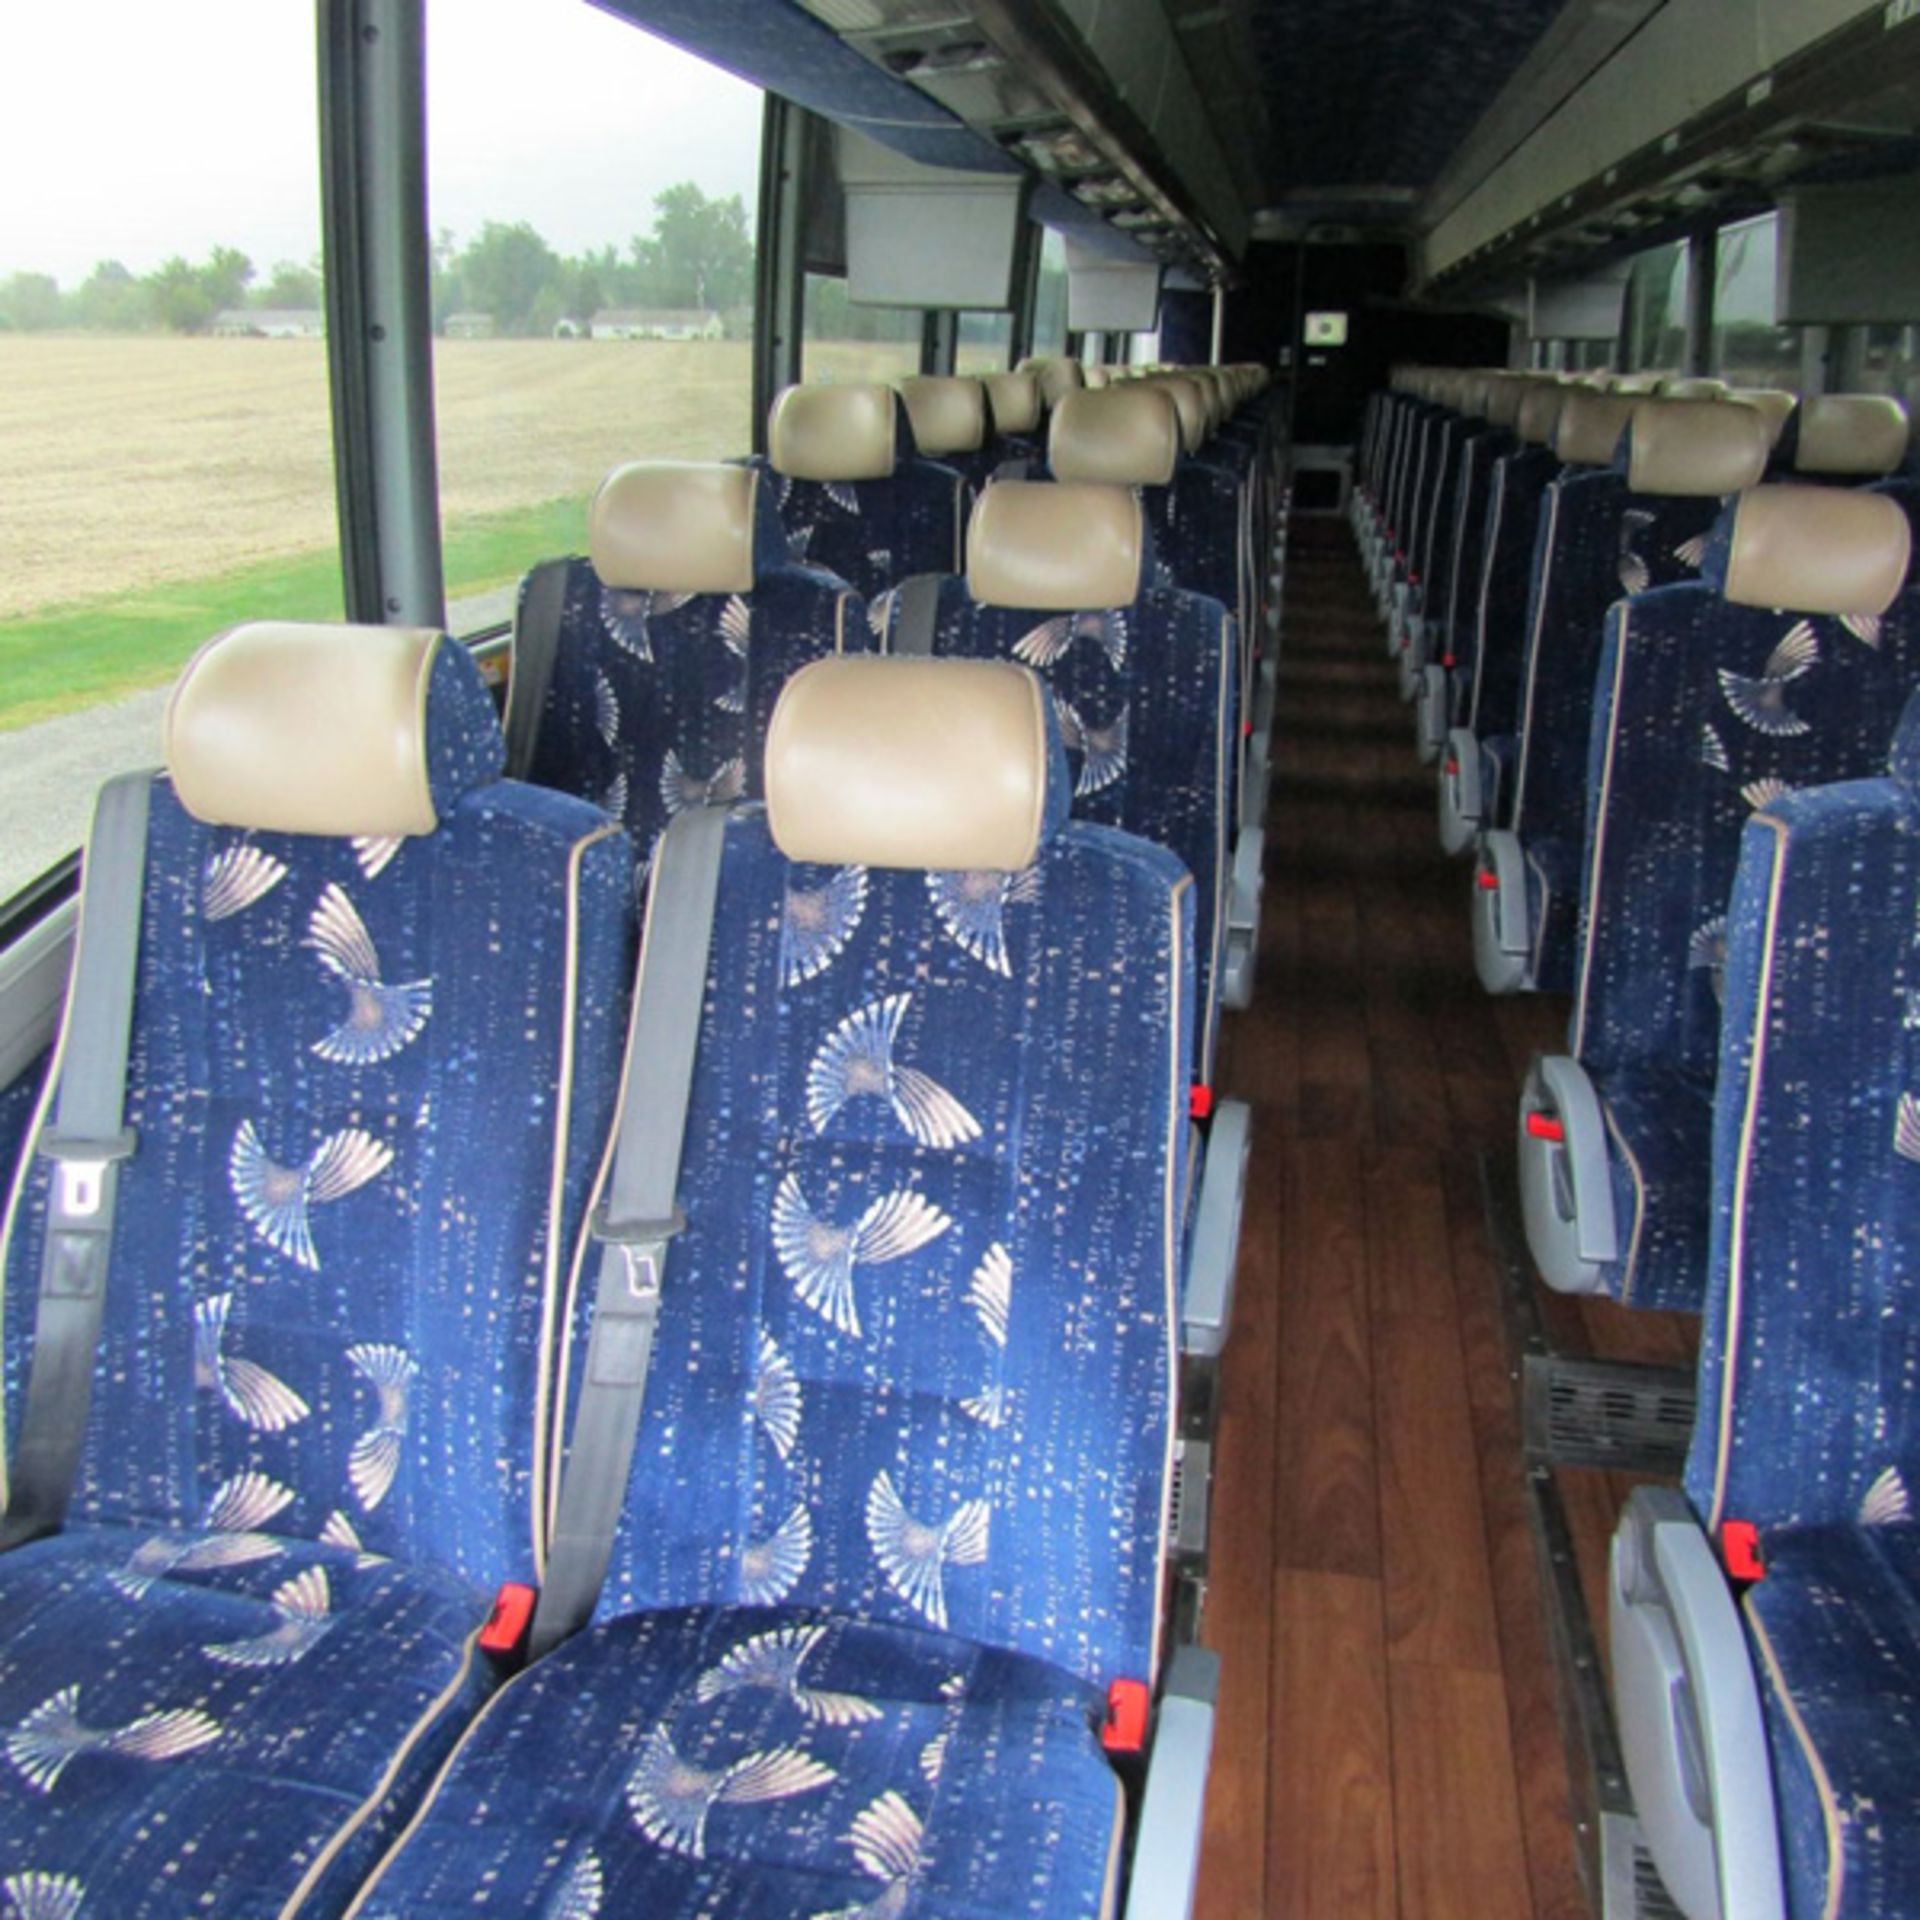 2014 MCI J4500 56-Passenger Charter Bus - Dual Axle, VIN 2MG3JMBA5EW066734, 285,500 Miles (Bus 244), - Bild 7 aus 8